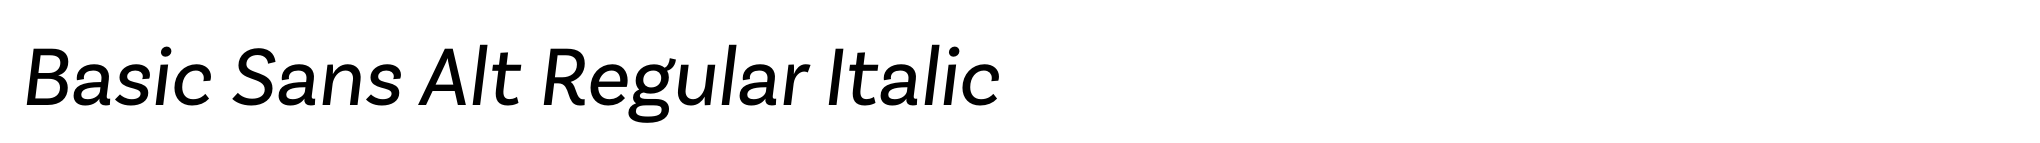 Basic Sans Alt Regular Italic image